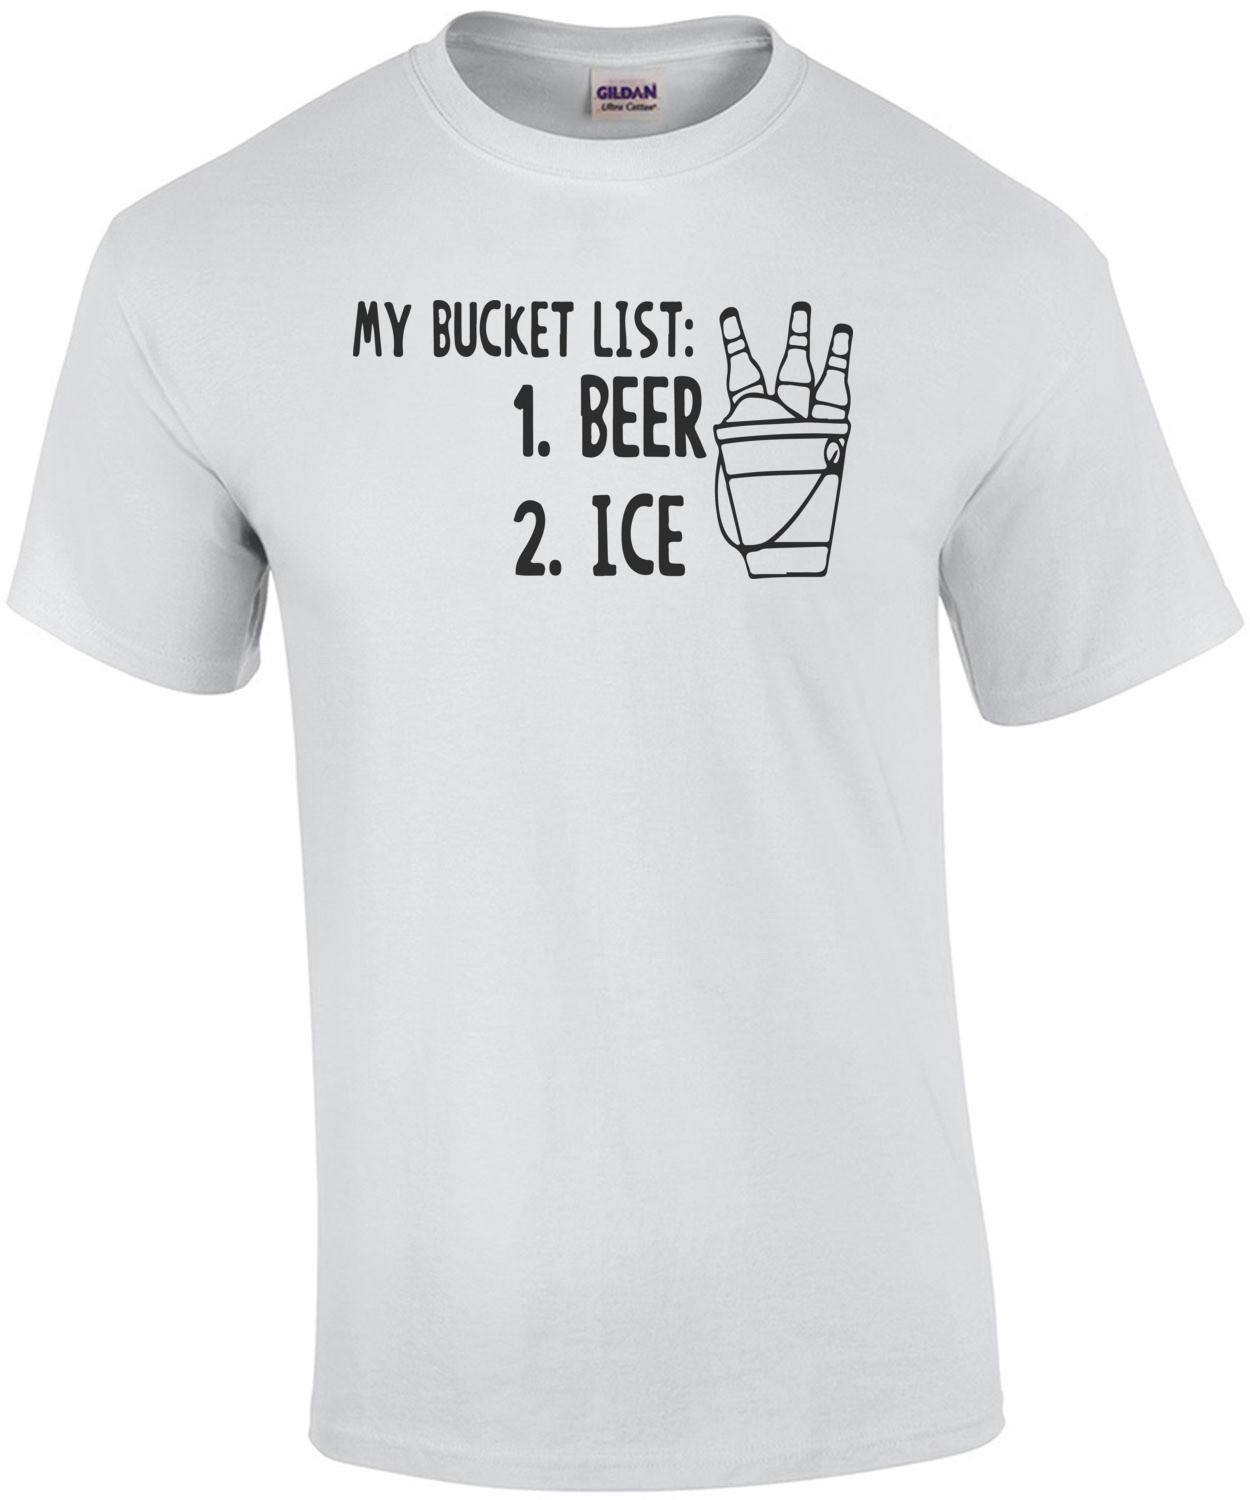 My Bucket List: 1. Beer 2. Ice